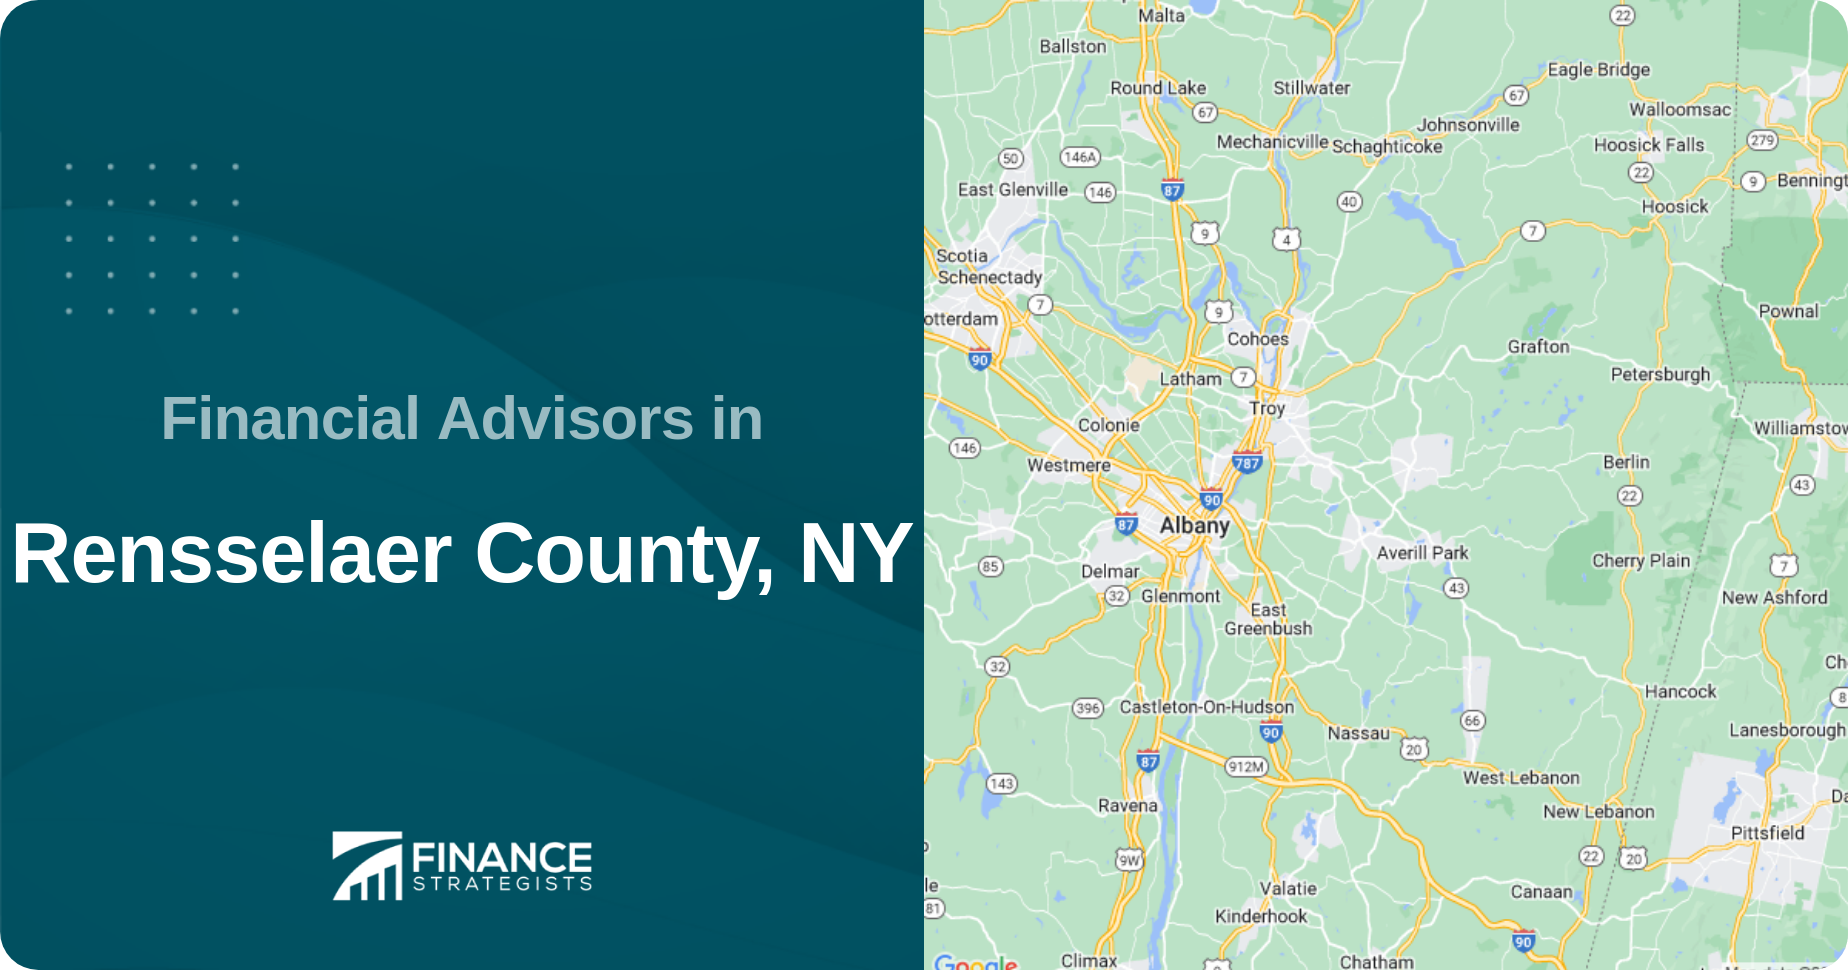 Financial Advisors in Rensselaer County, NY